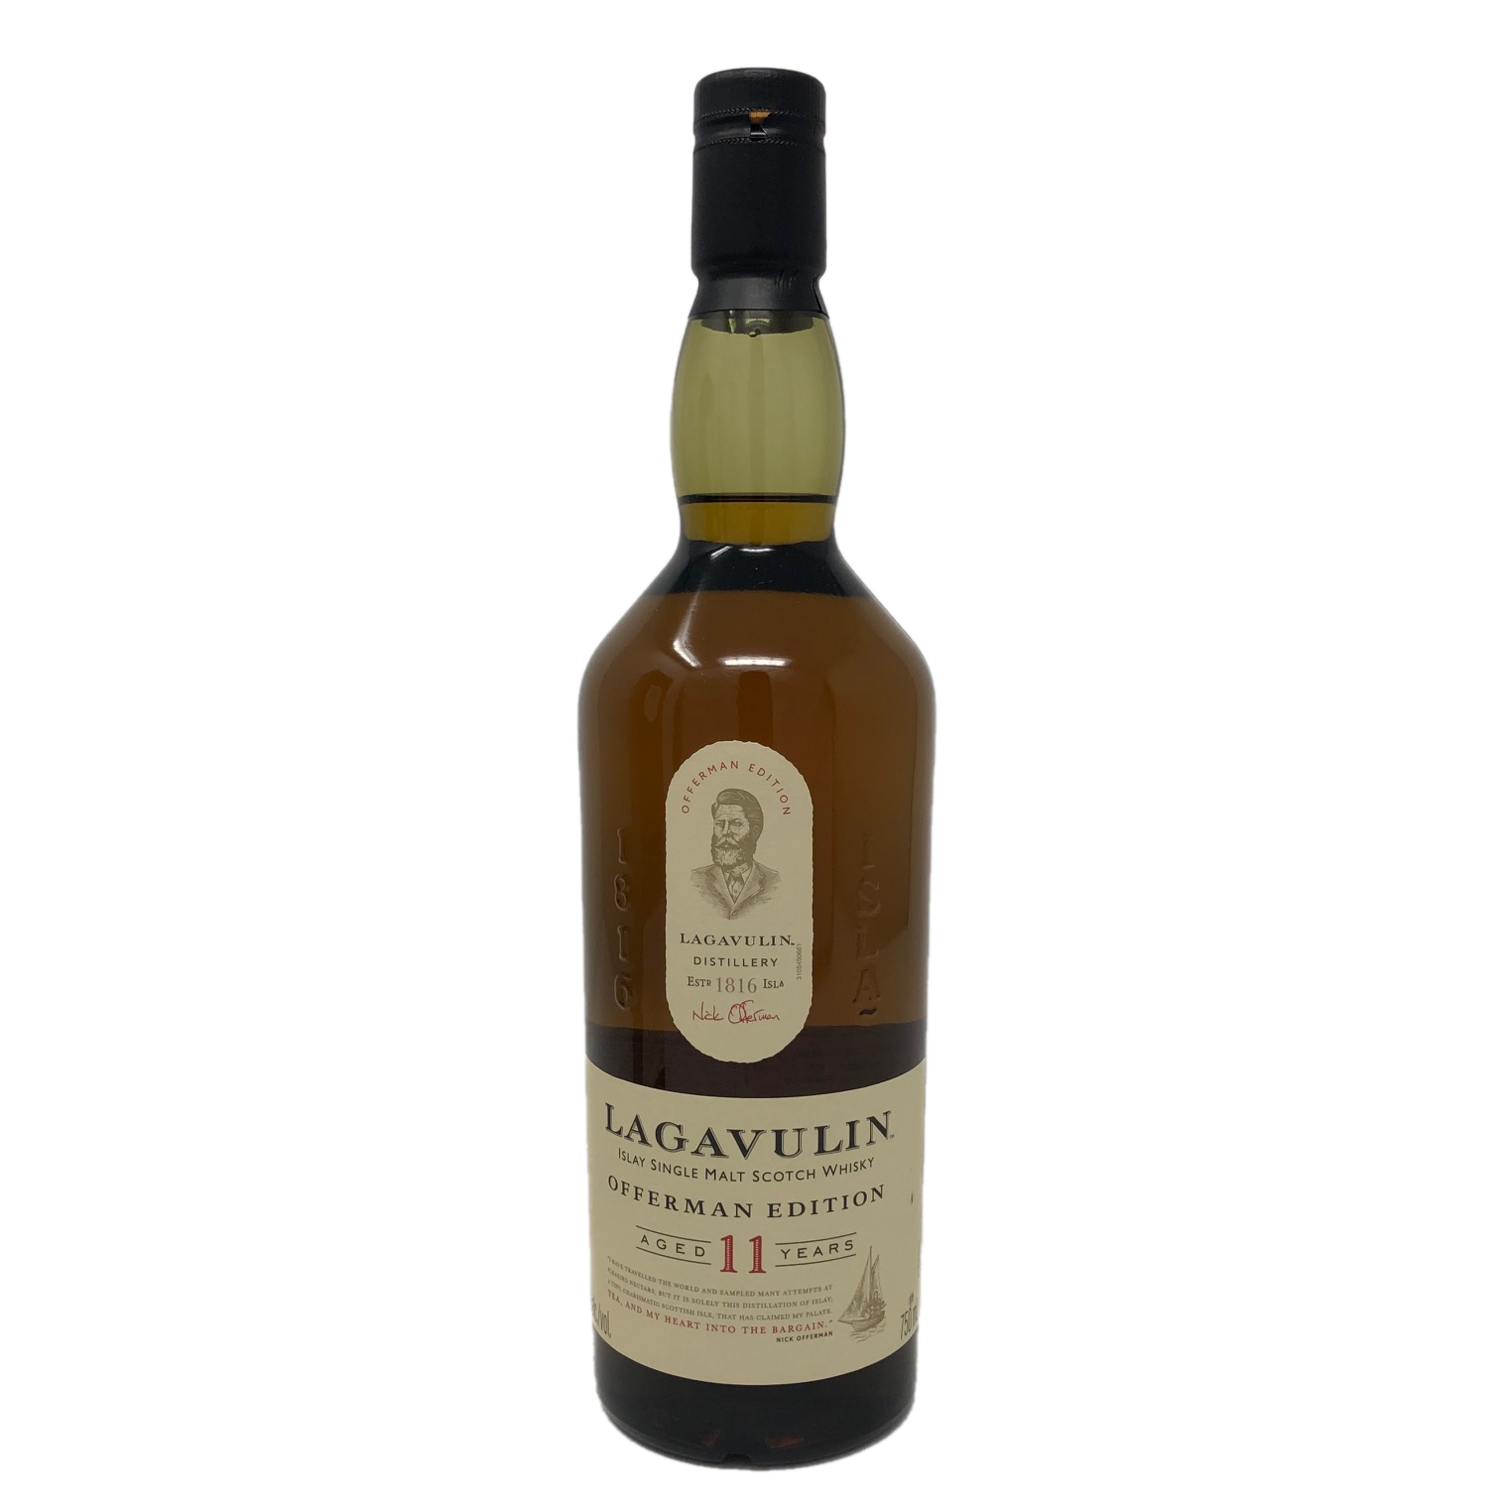 Lagavulin Offerman Edition #1 11 Year Single Malt Scotch Whisky